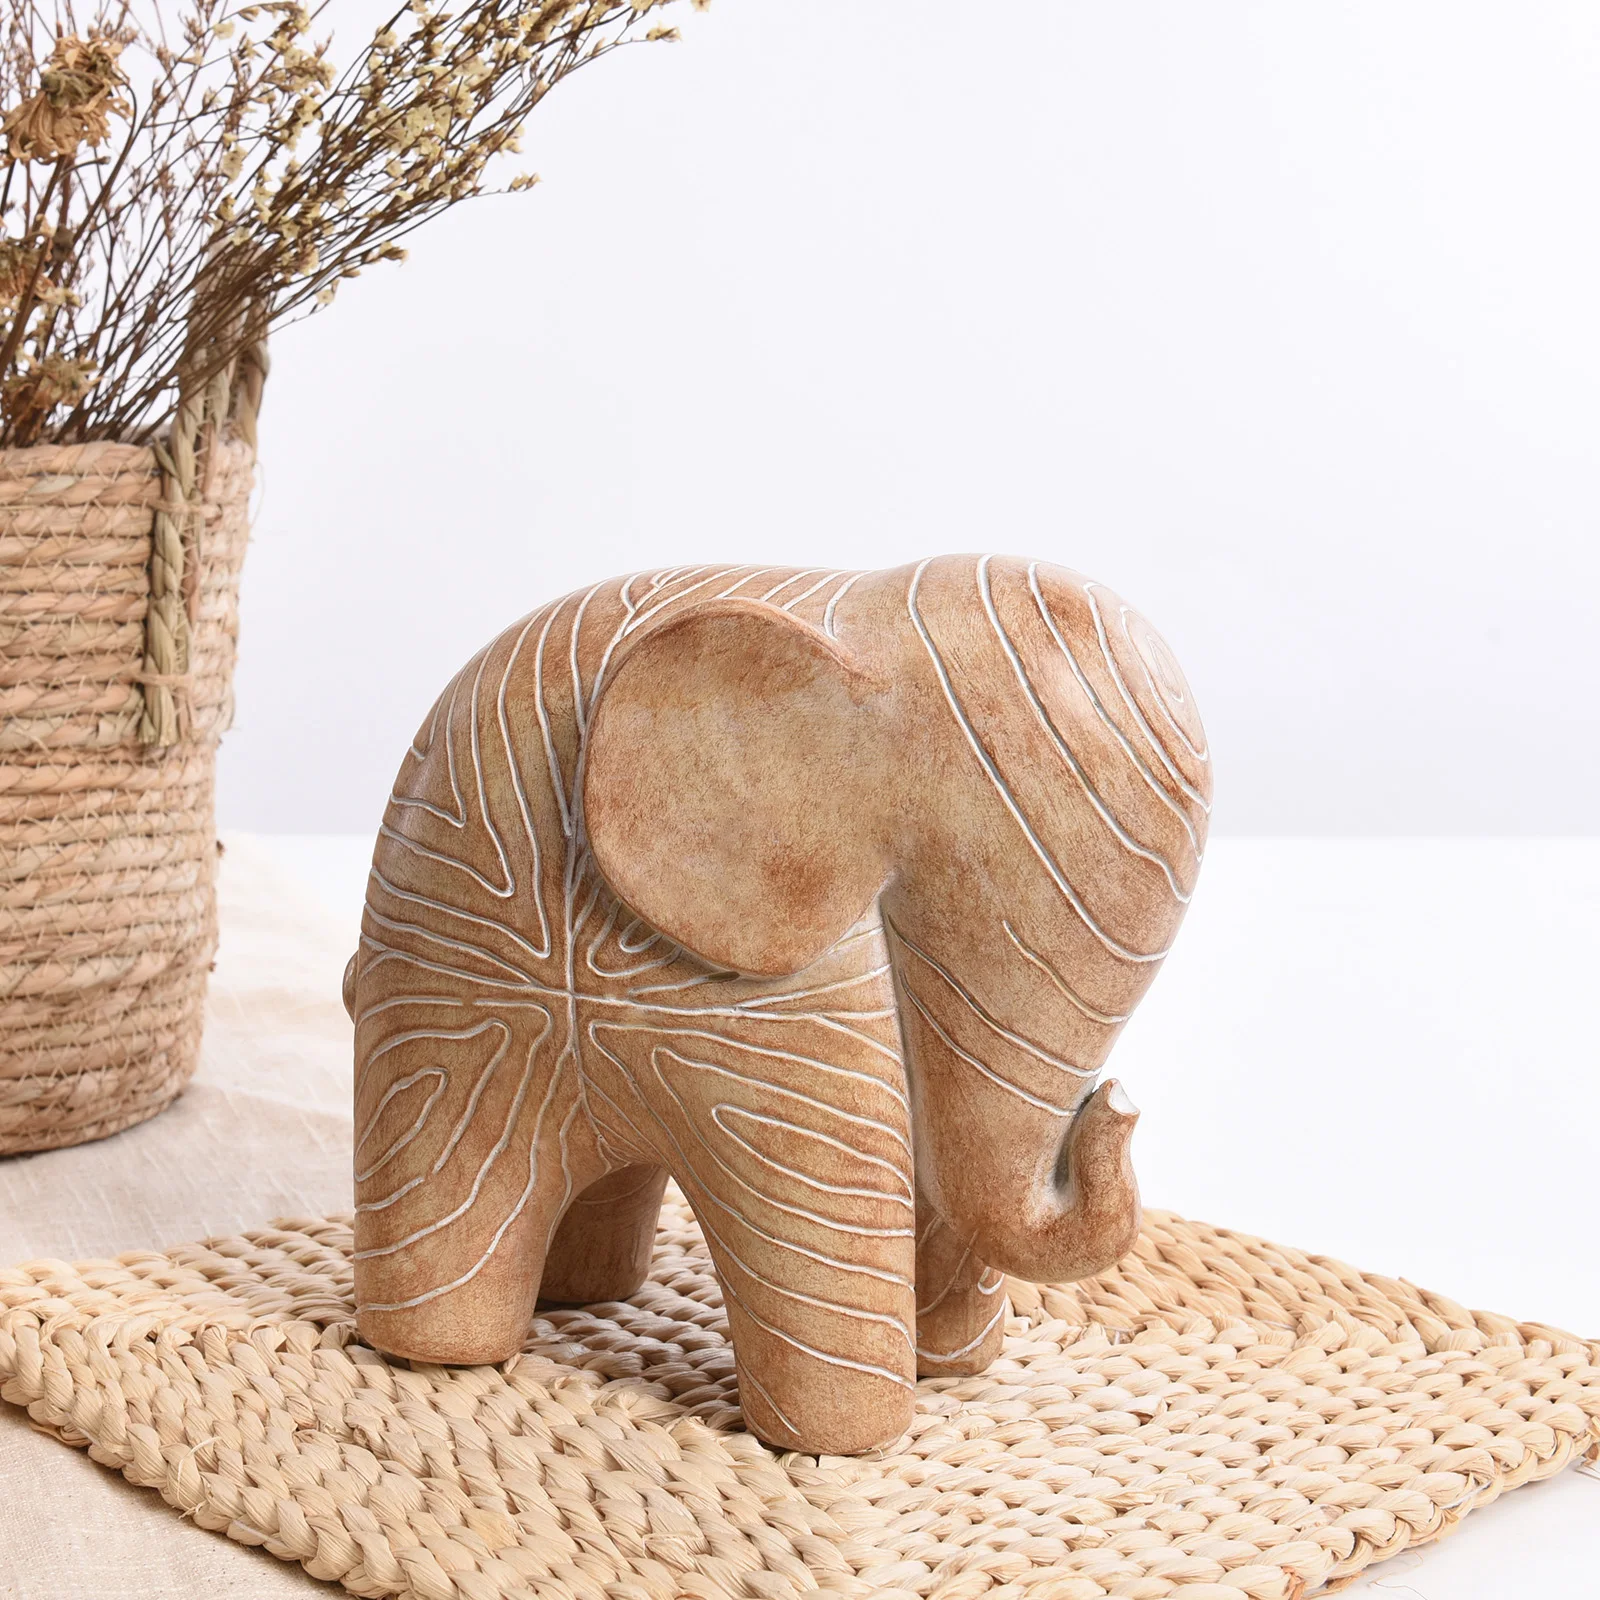 

Kakizzy Creative Ethnic Style Resin Animal Home Elephant Sculpture Figurine Craft Study Bookcase Decoration